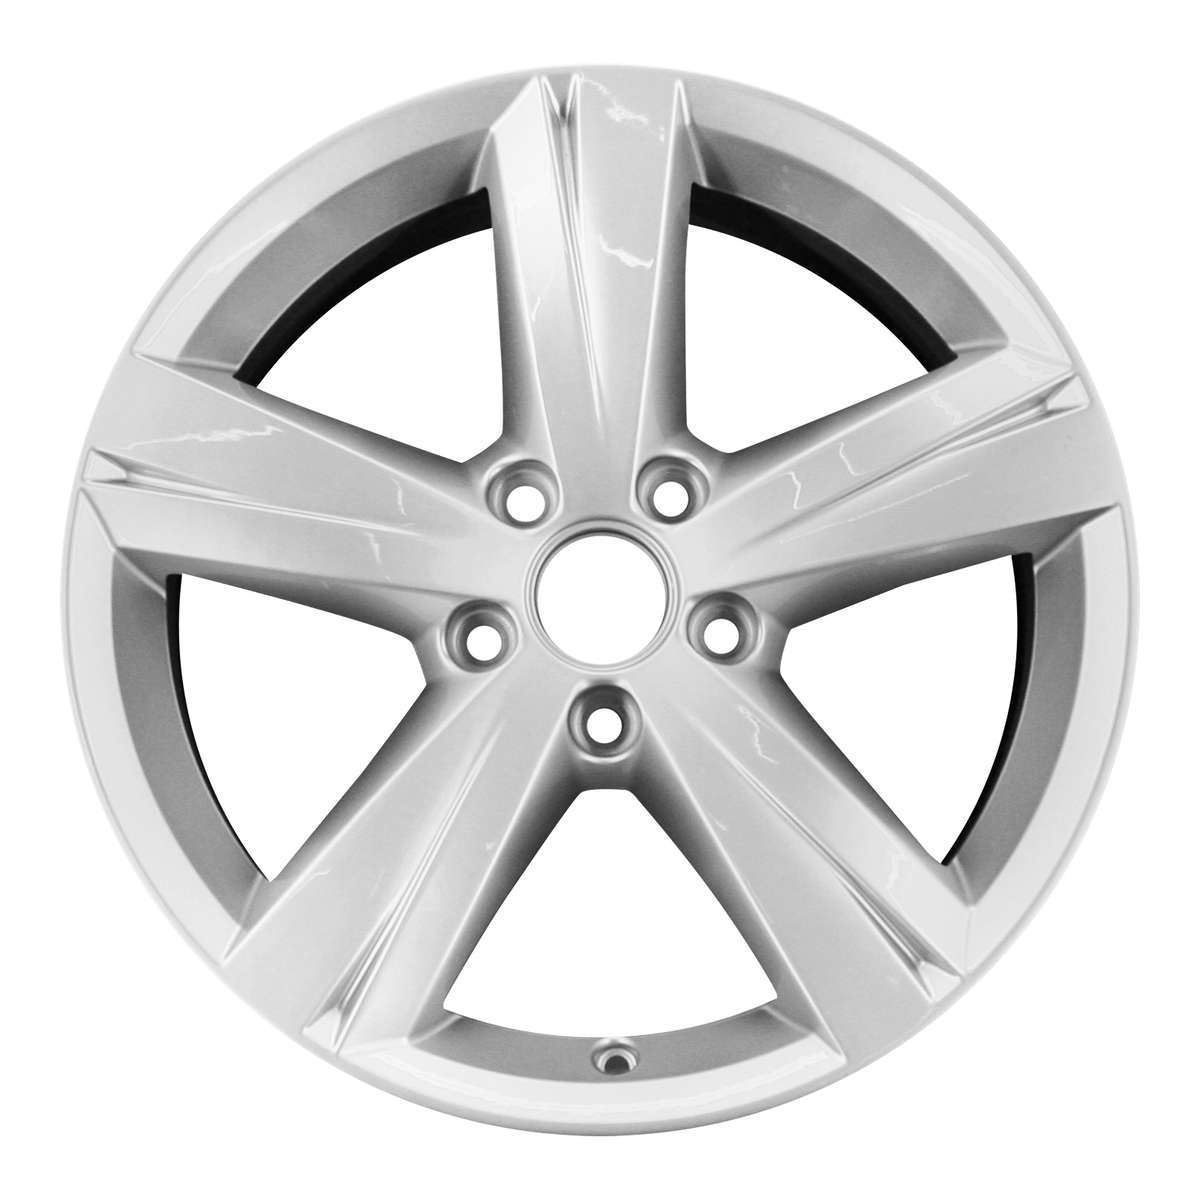 2013 Volkswagen Passat 17" OEM Wheel Rim Sonoma W69928S